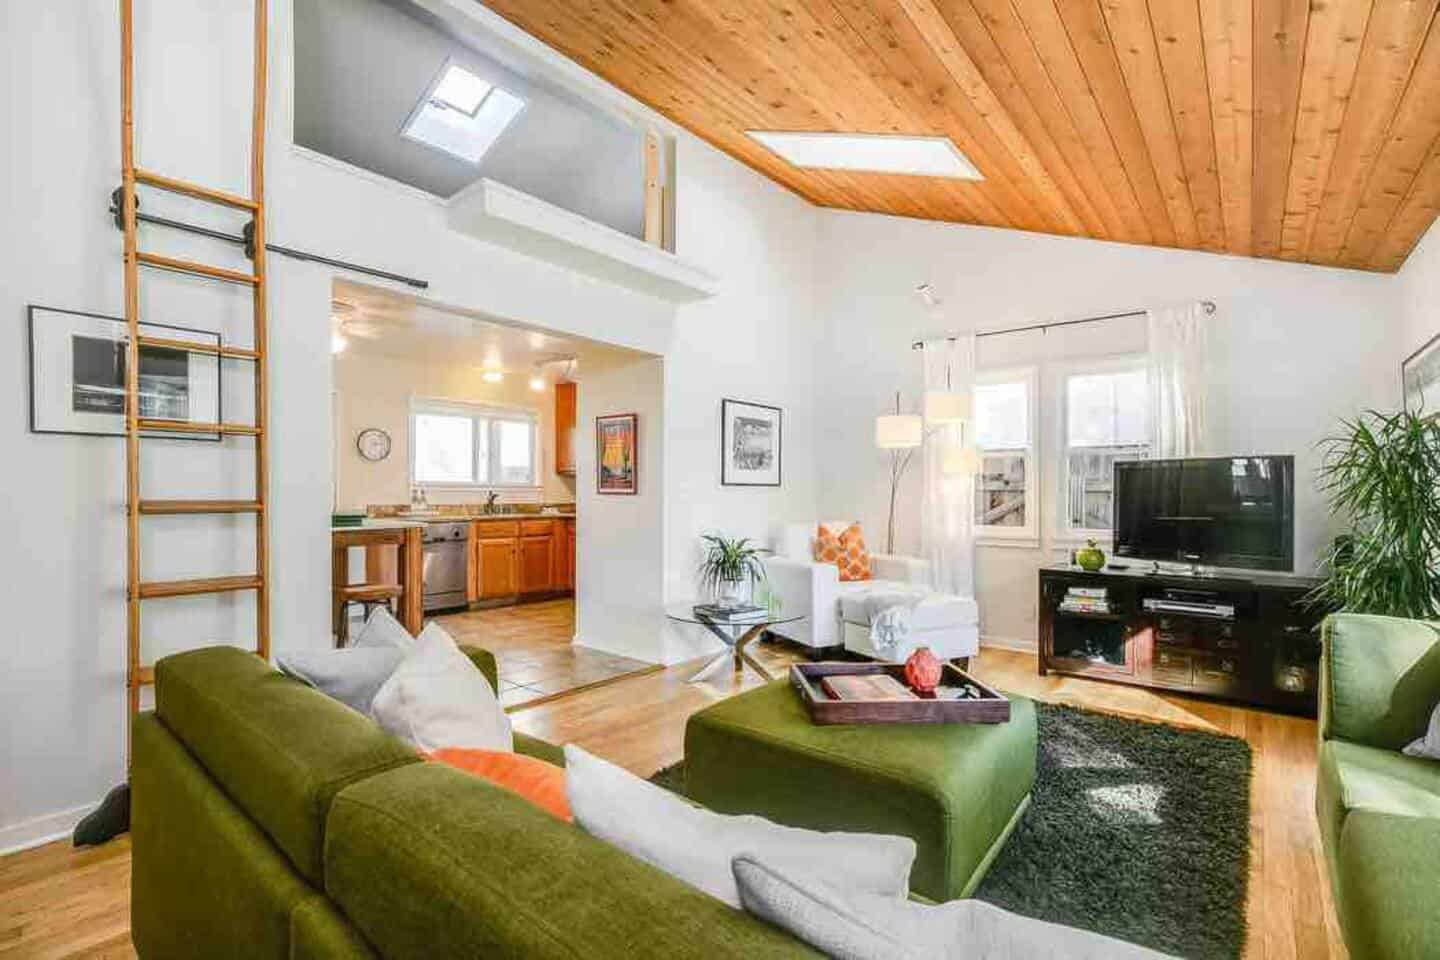 Image of Airbnb rental in Ojai, California